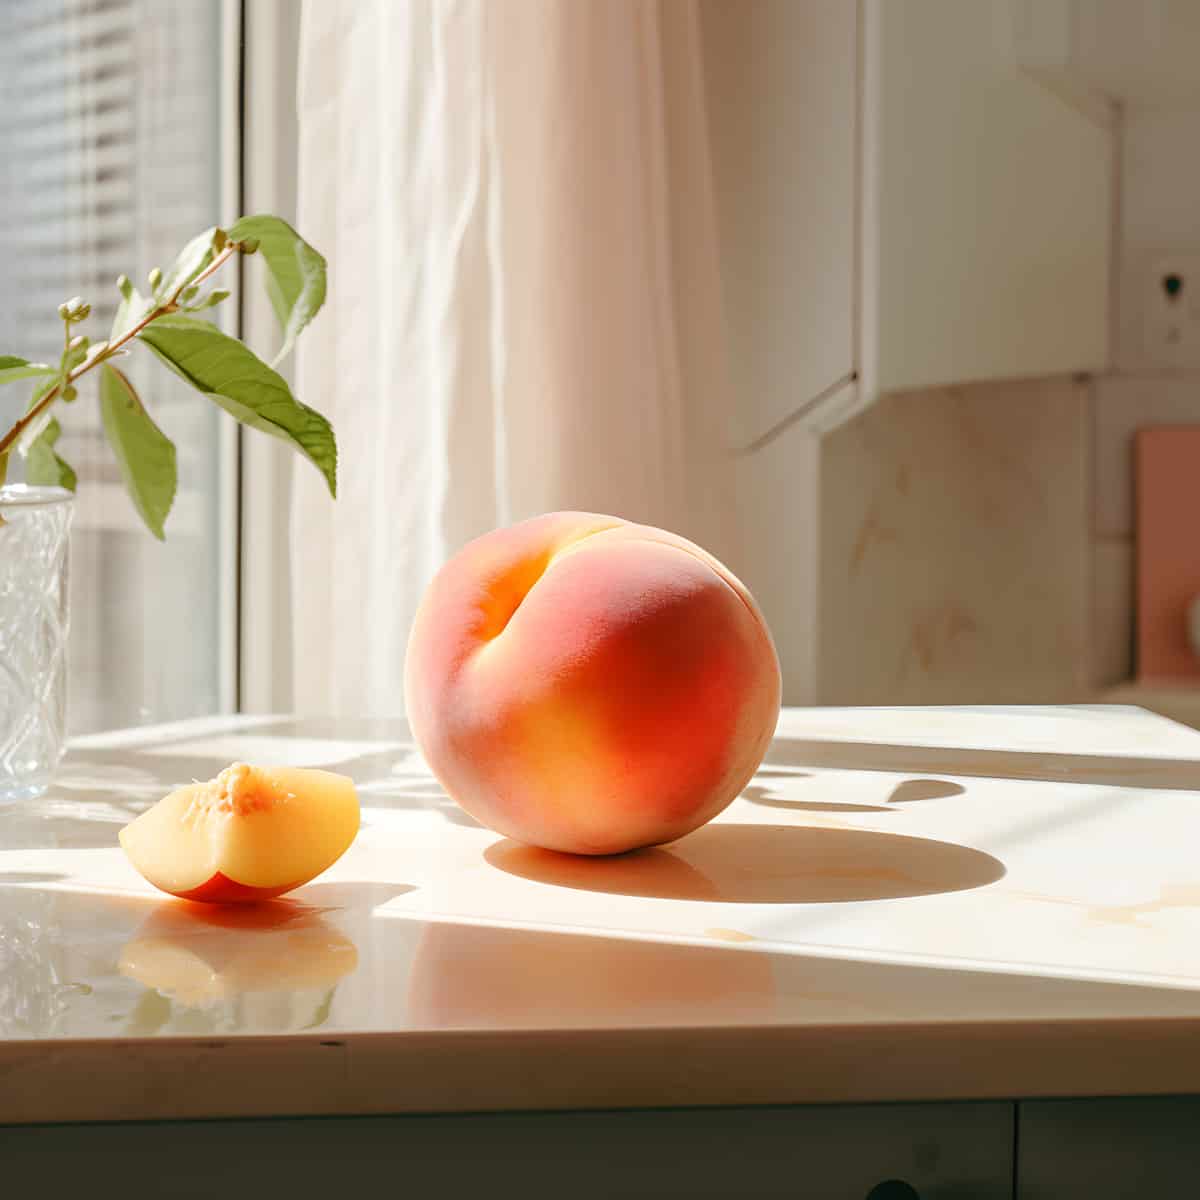 Davids Peach on a kitchen counter